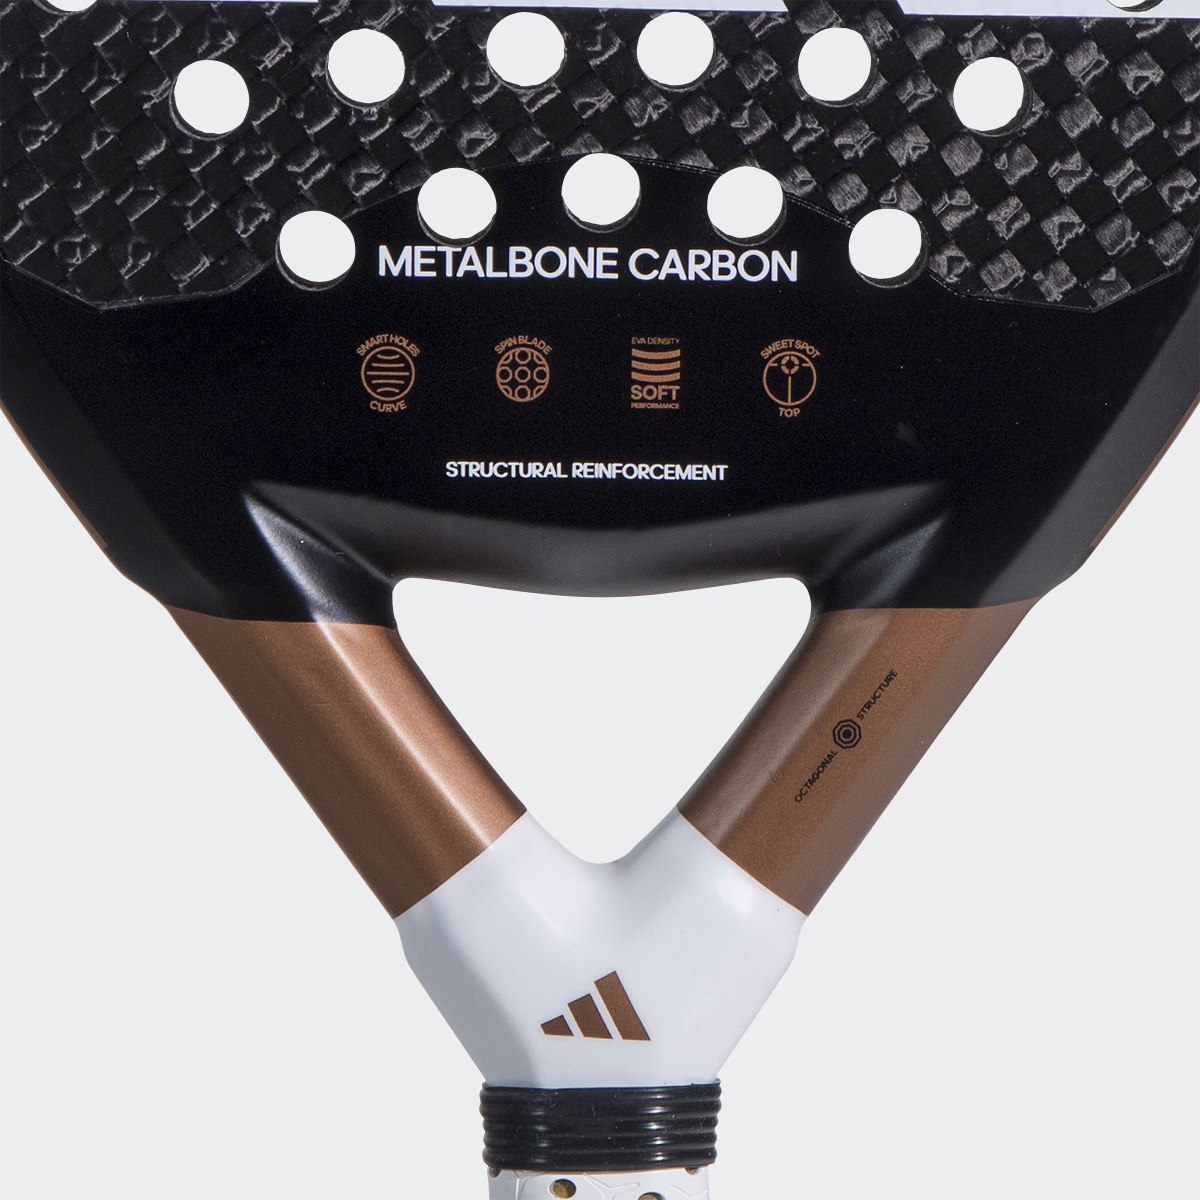 Adidas Metalbone CARBON. 6